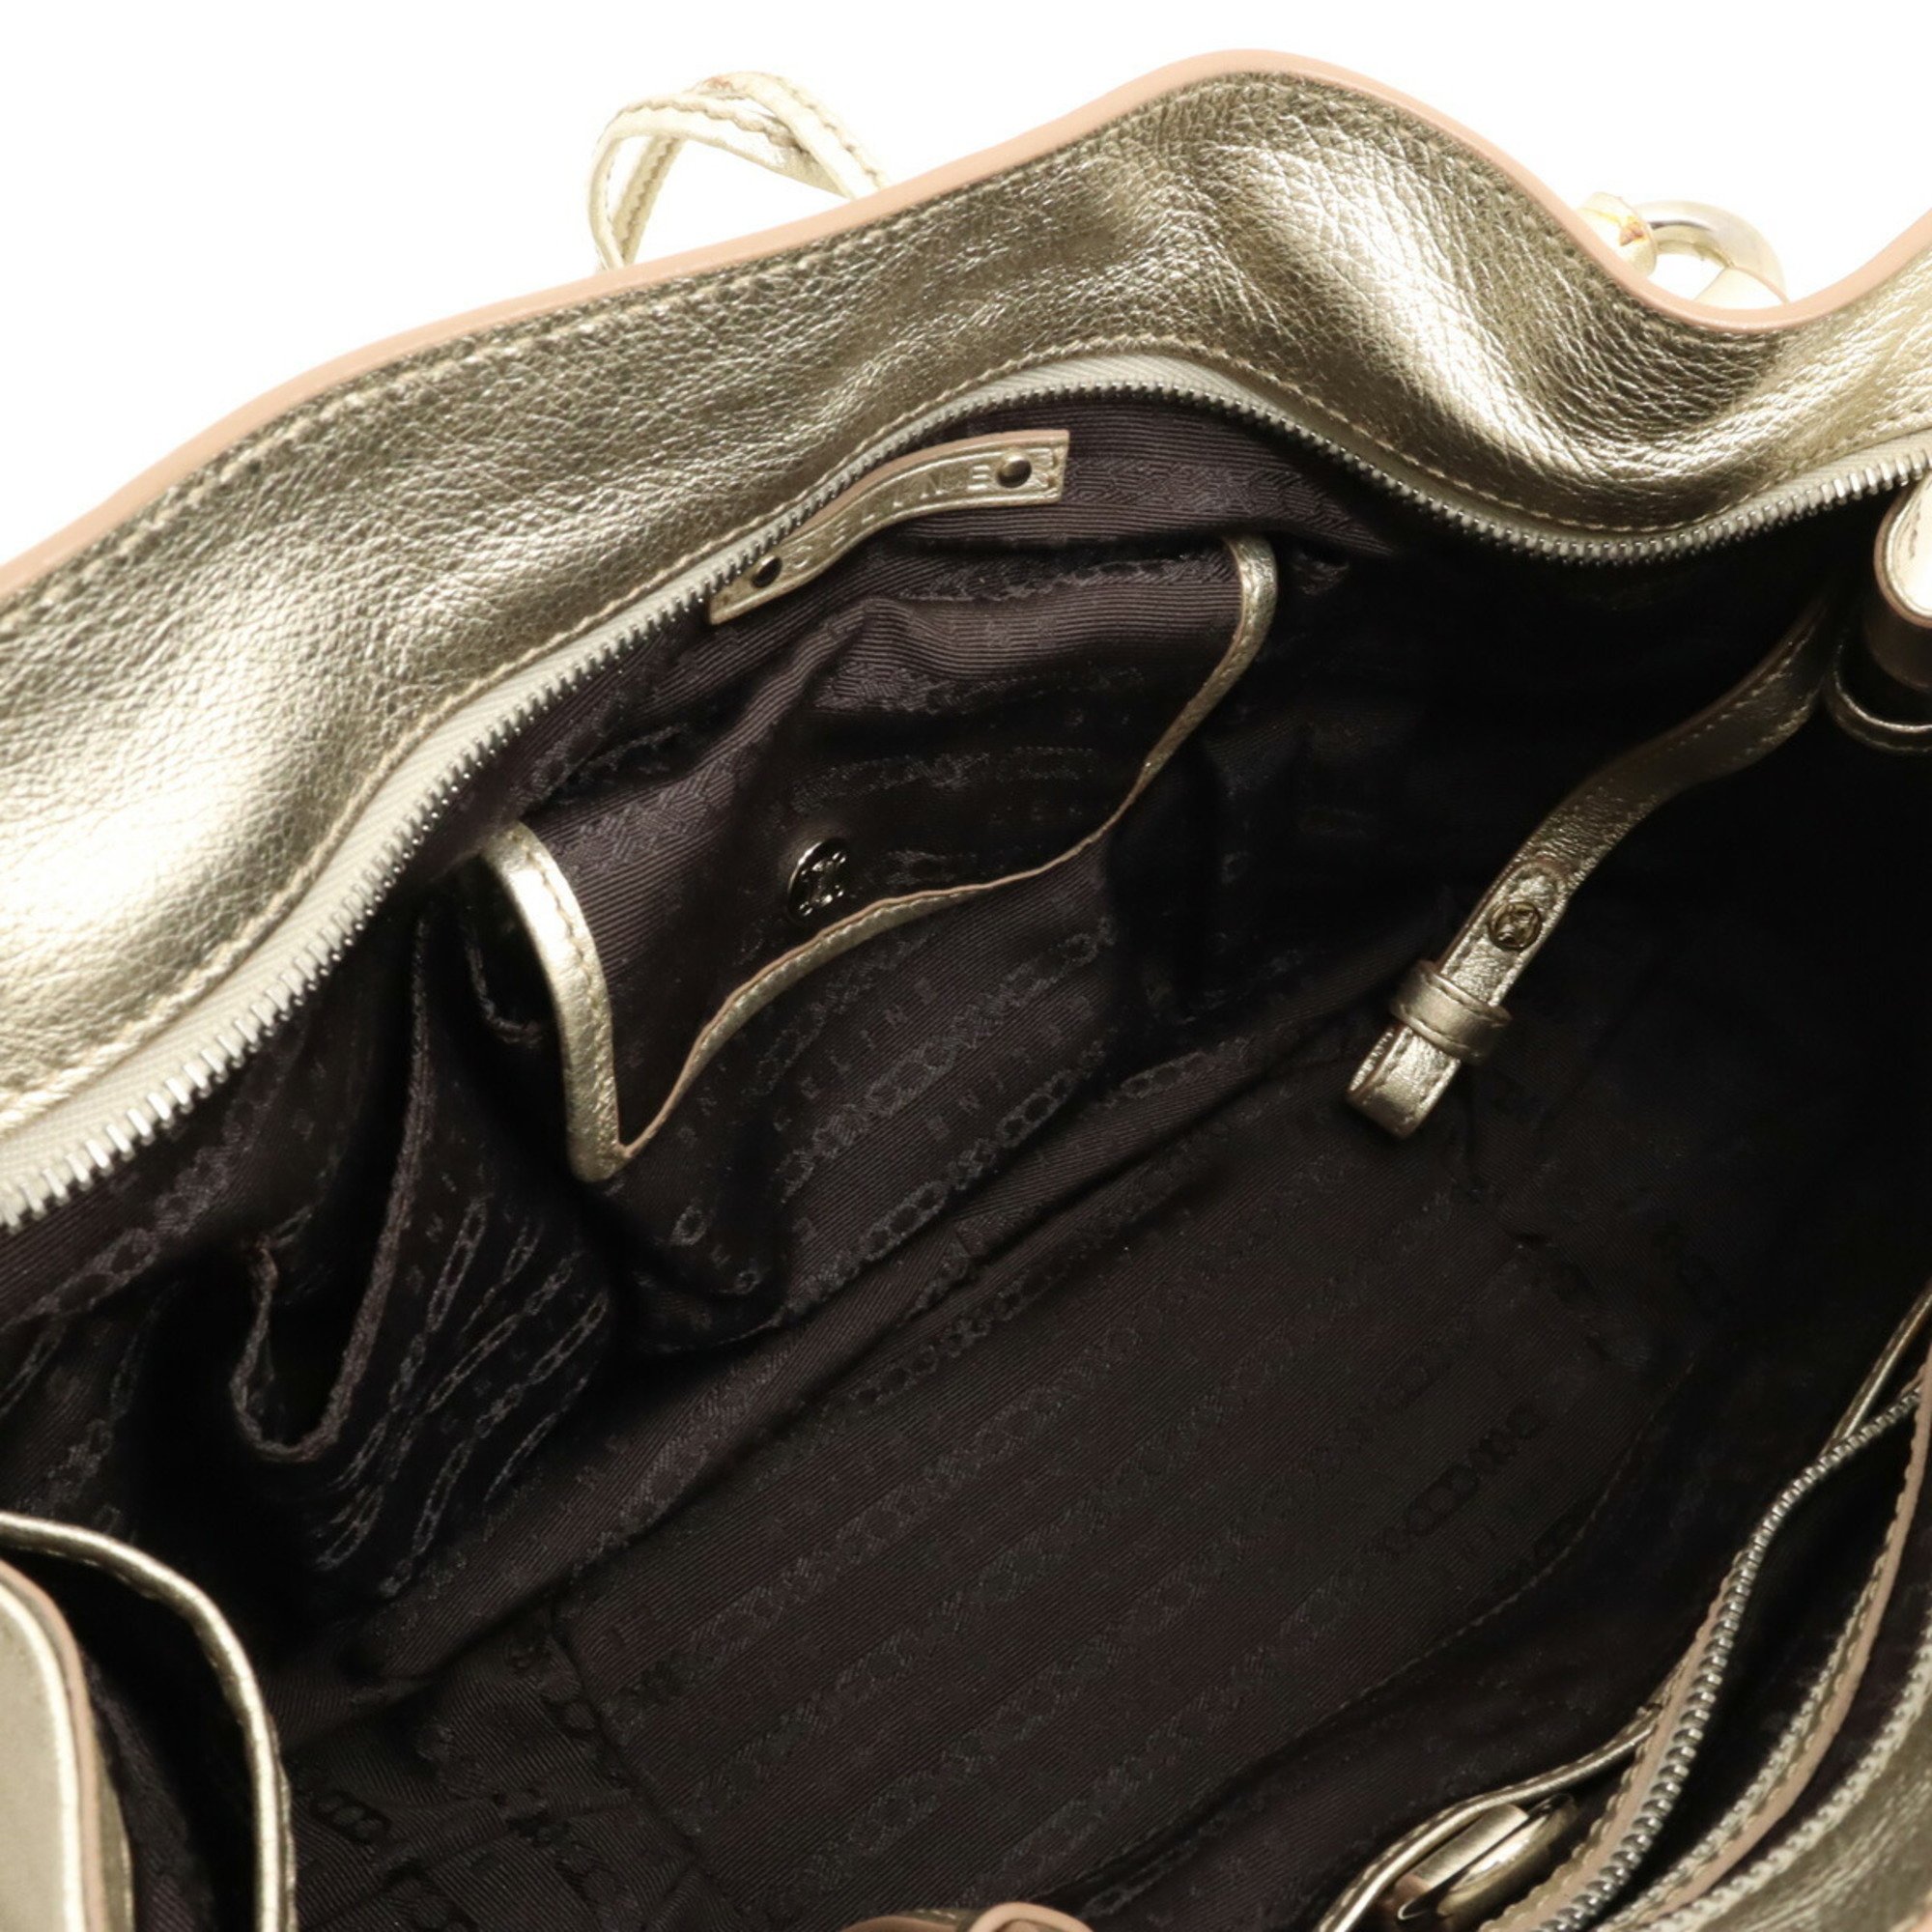 CELINE Tote bag, handbag, metallic leather, gold